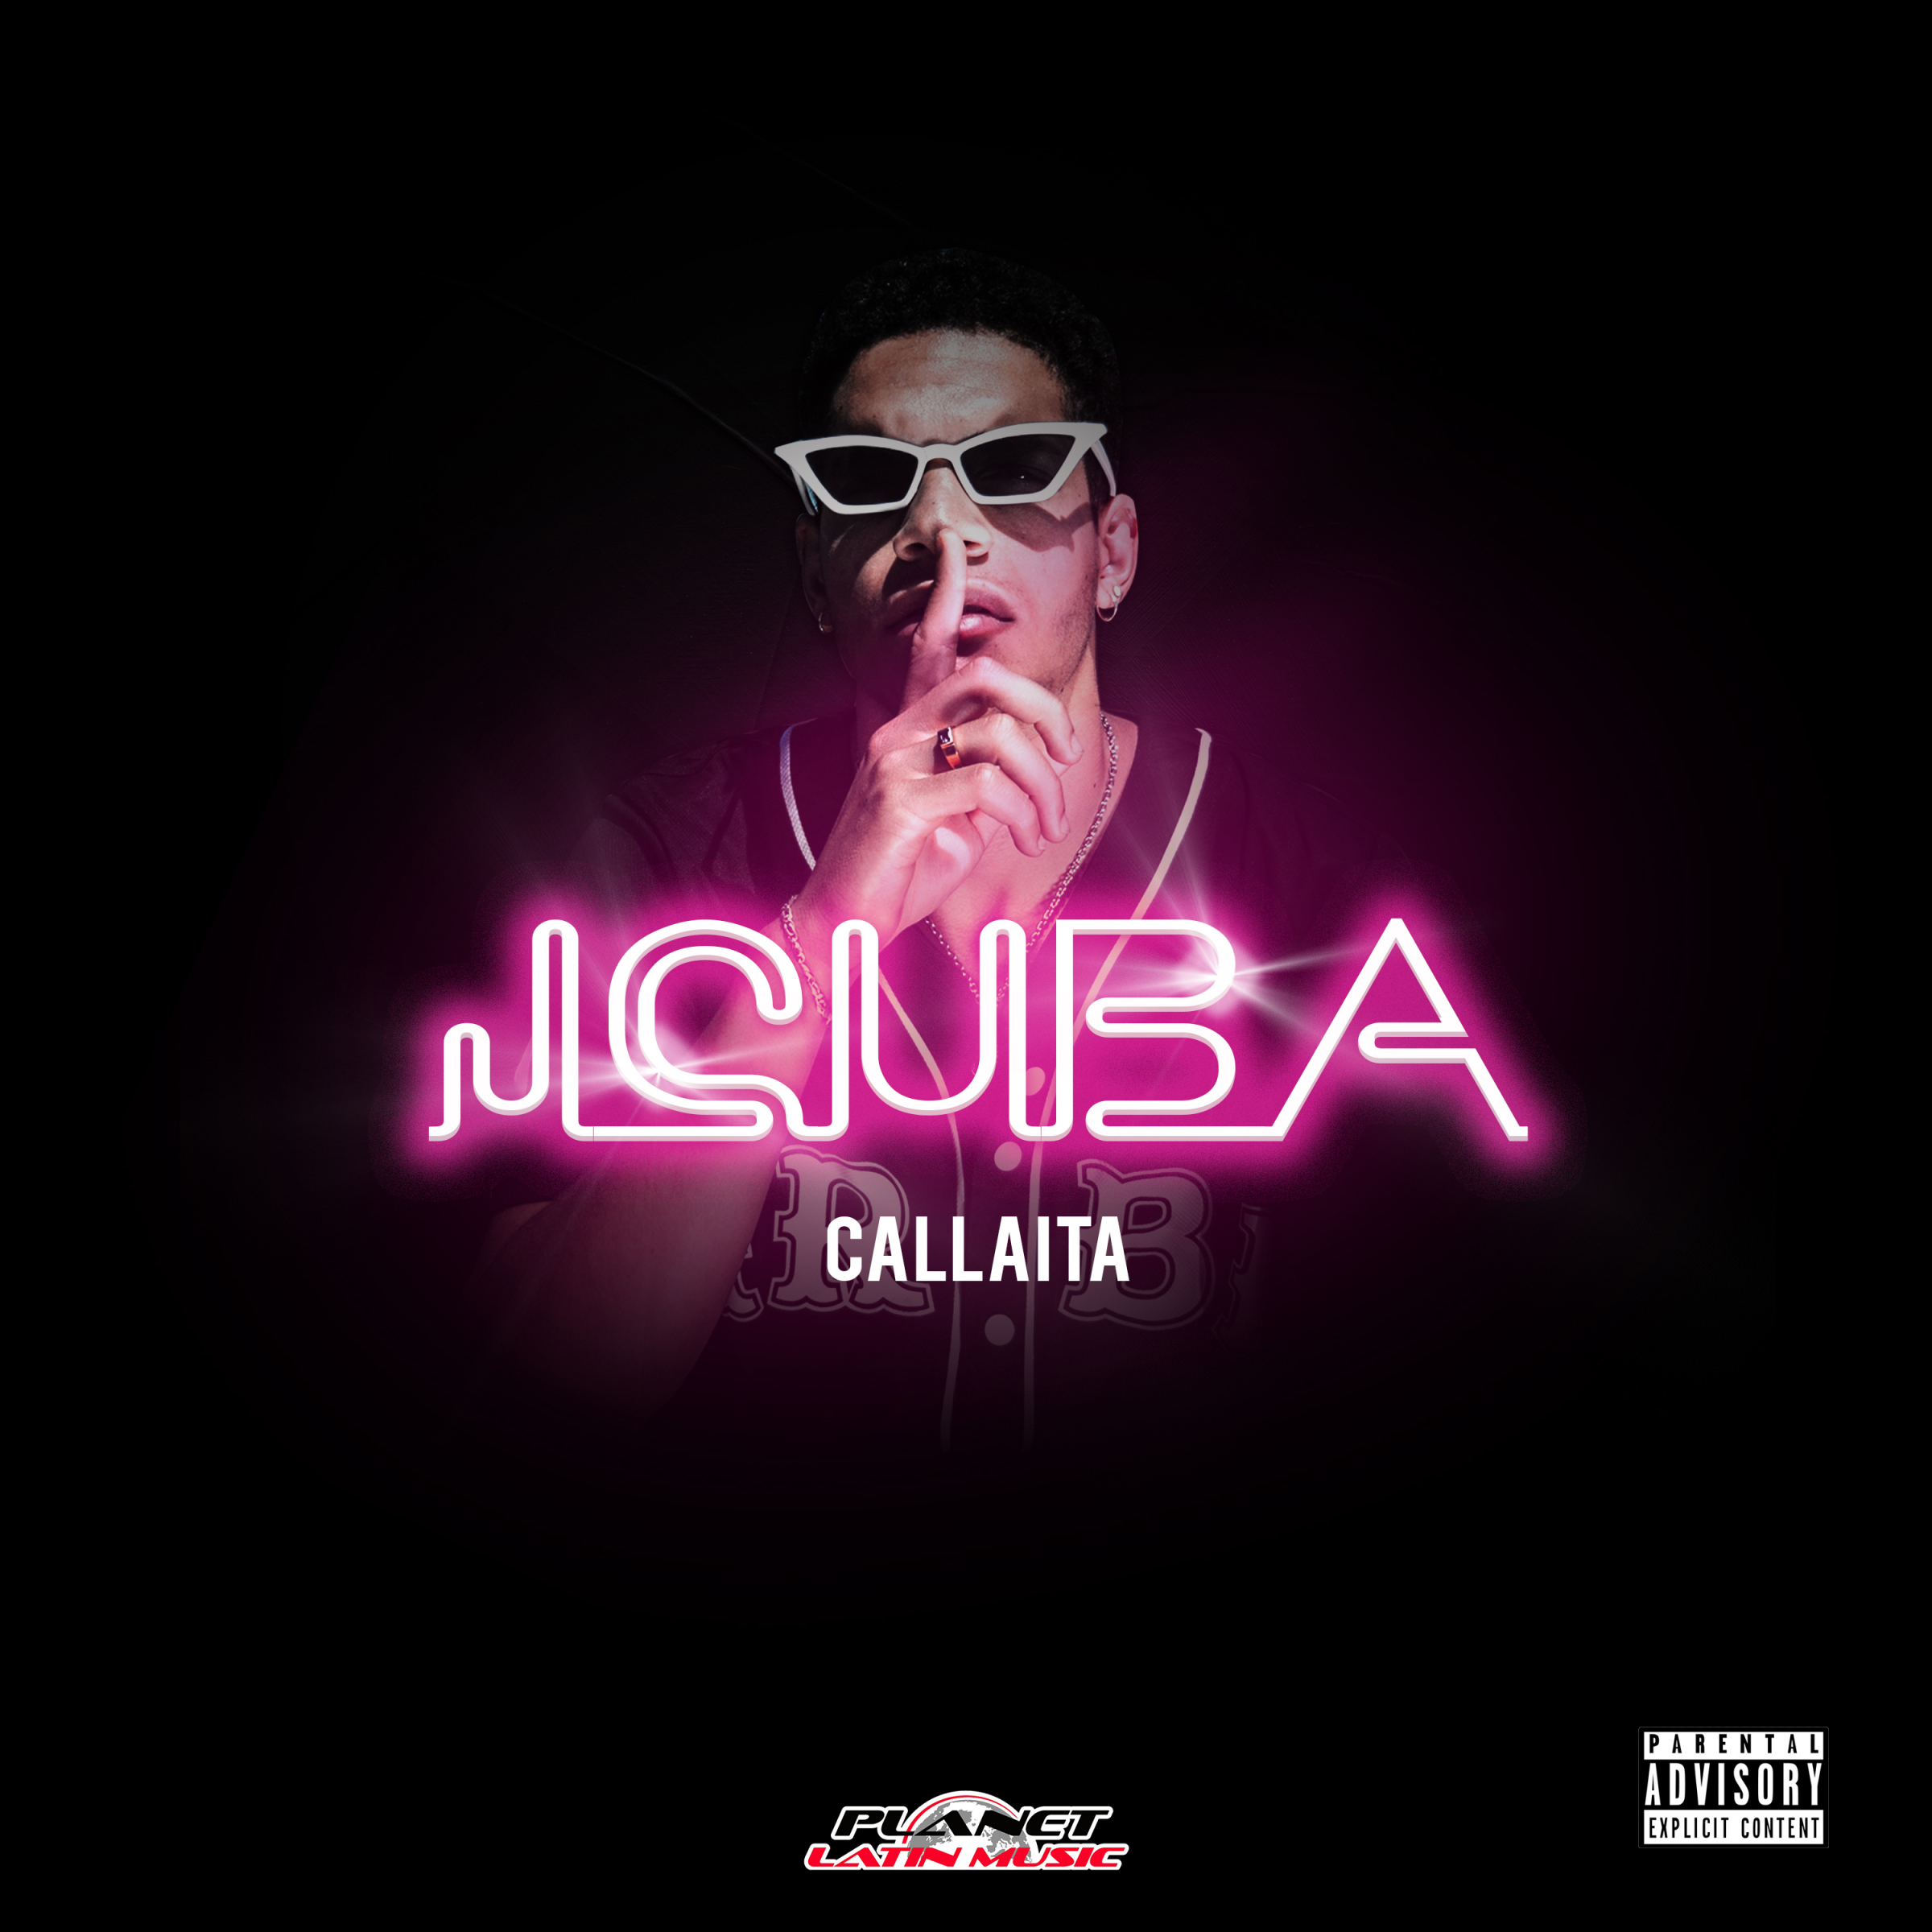 Jcuba - Callaita, Jcuba - Callaita (Original Mix), Jcuba - Callaita Ñ�ÐºÐ°Ñ‡Ð°Ñ‚ÑŒ...